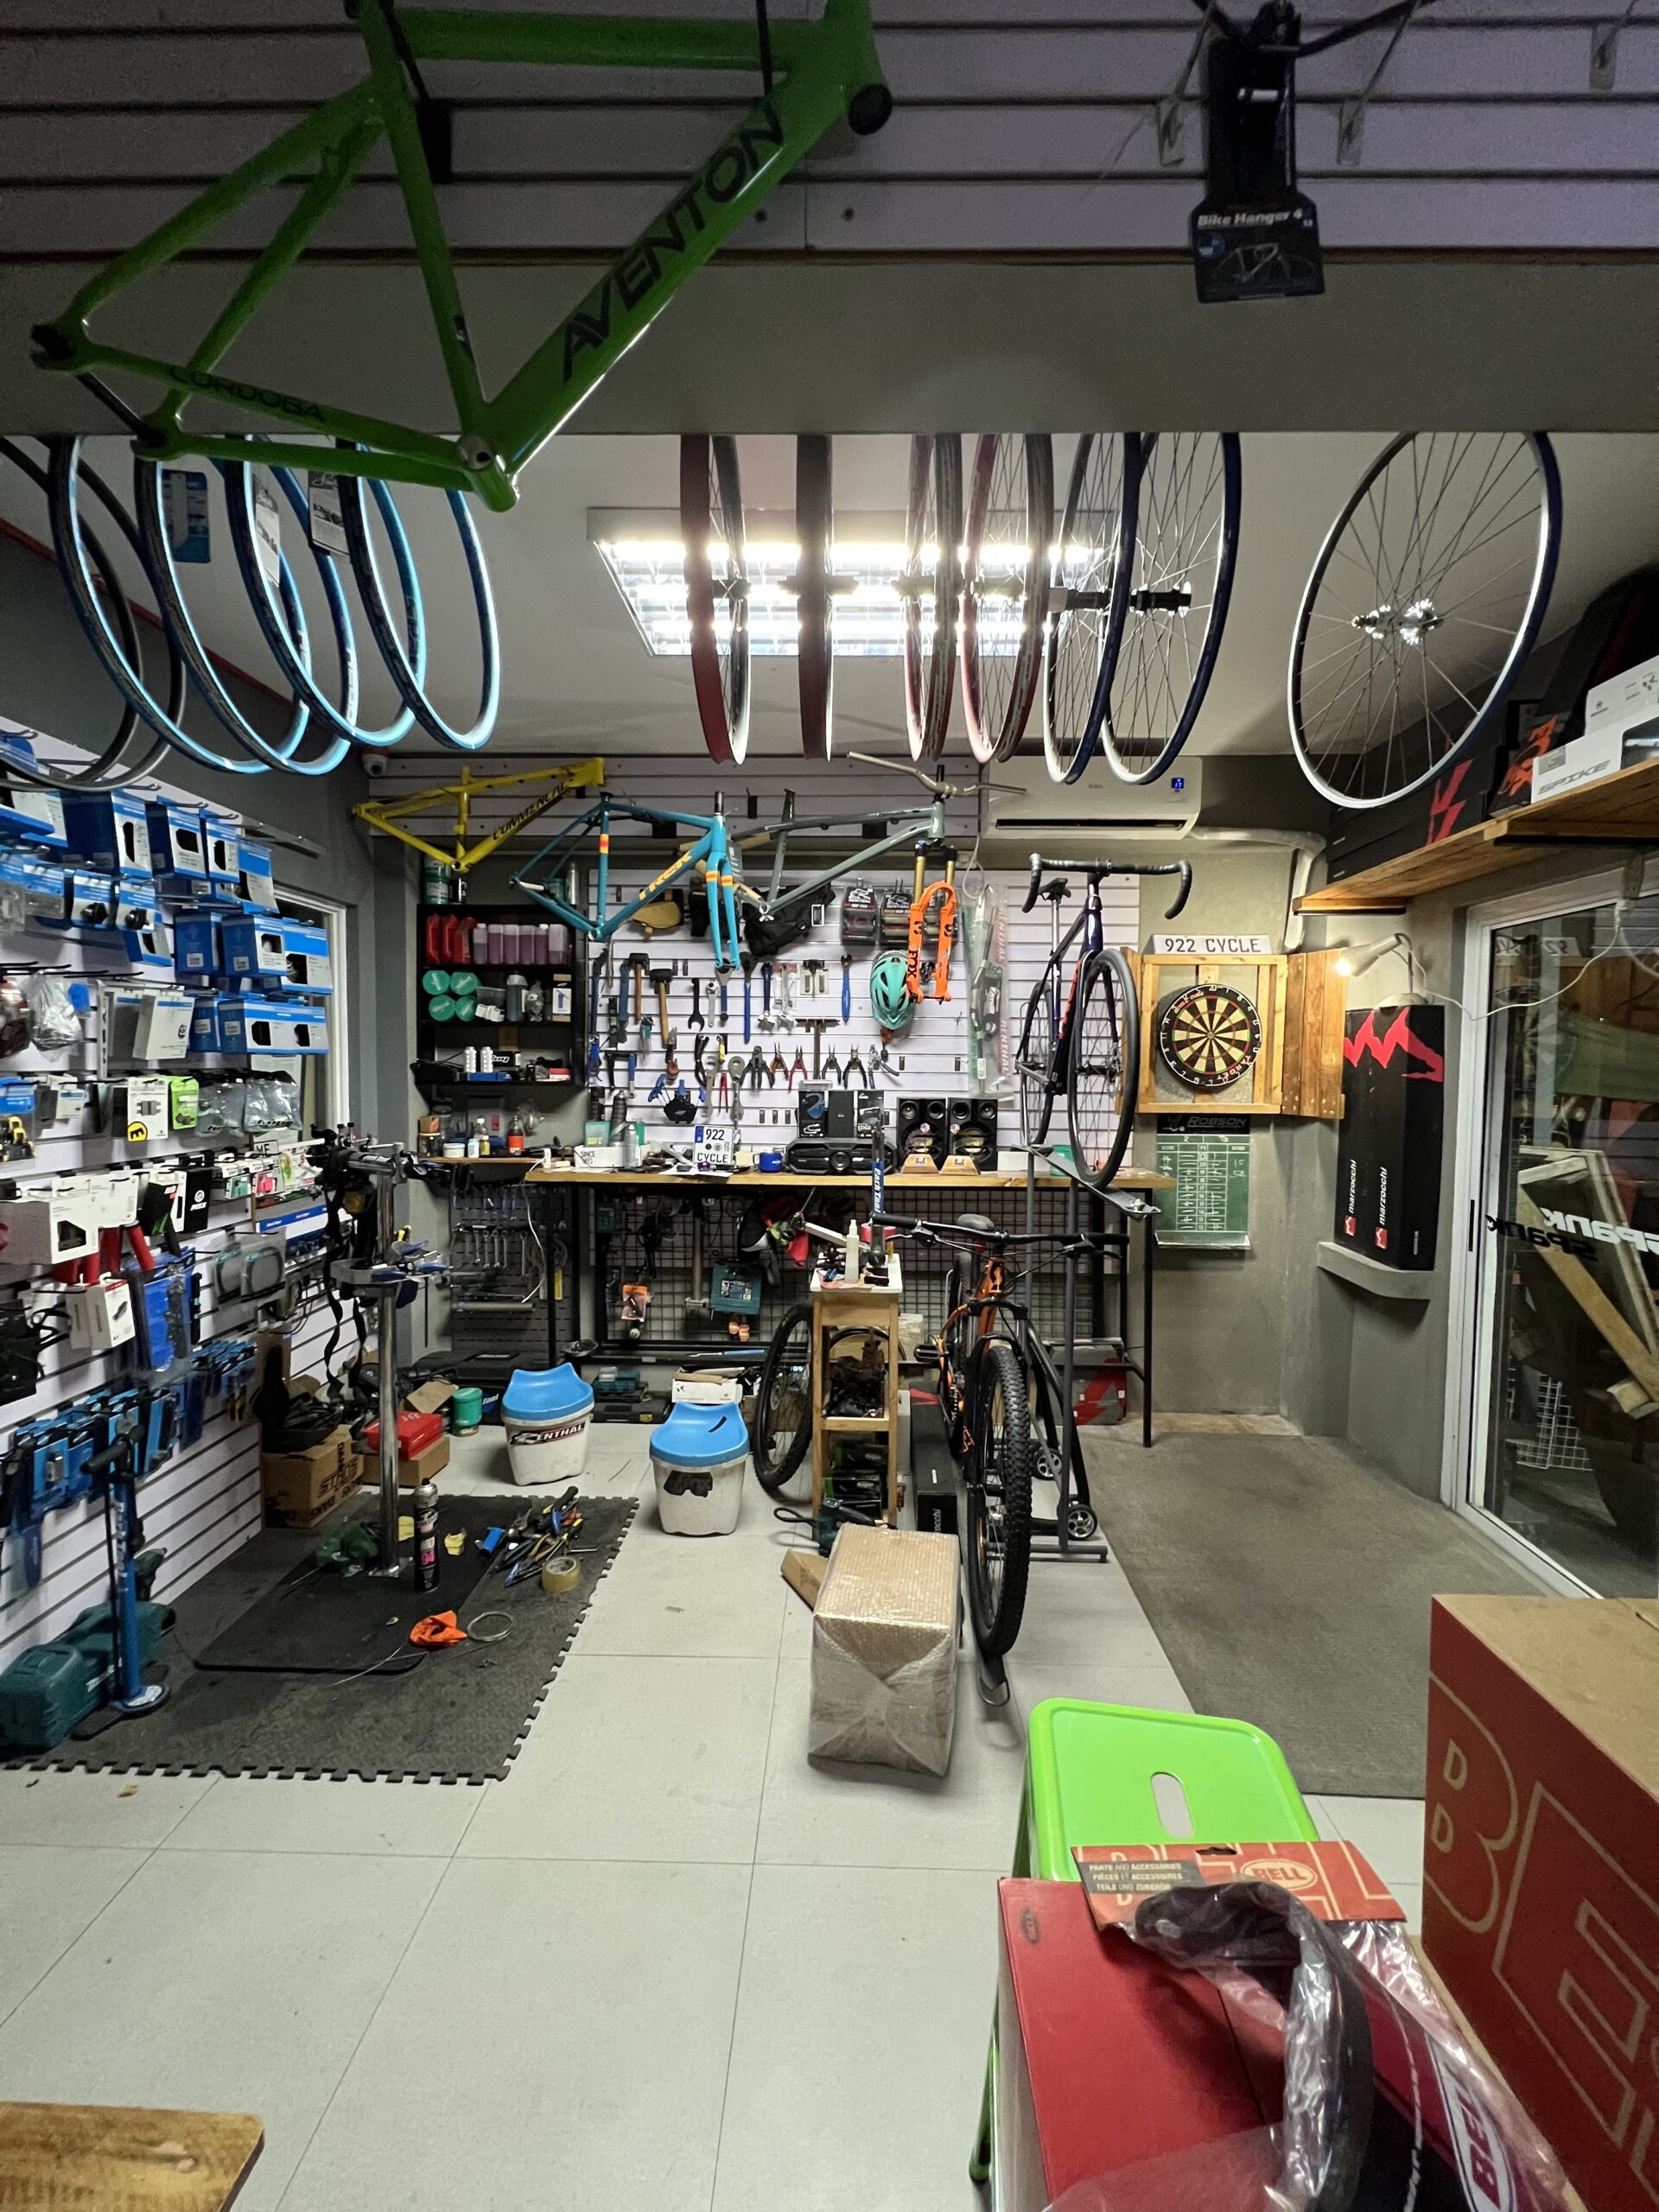 bike shops metro manila - 922 cycle